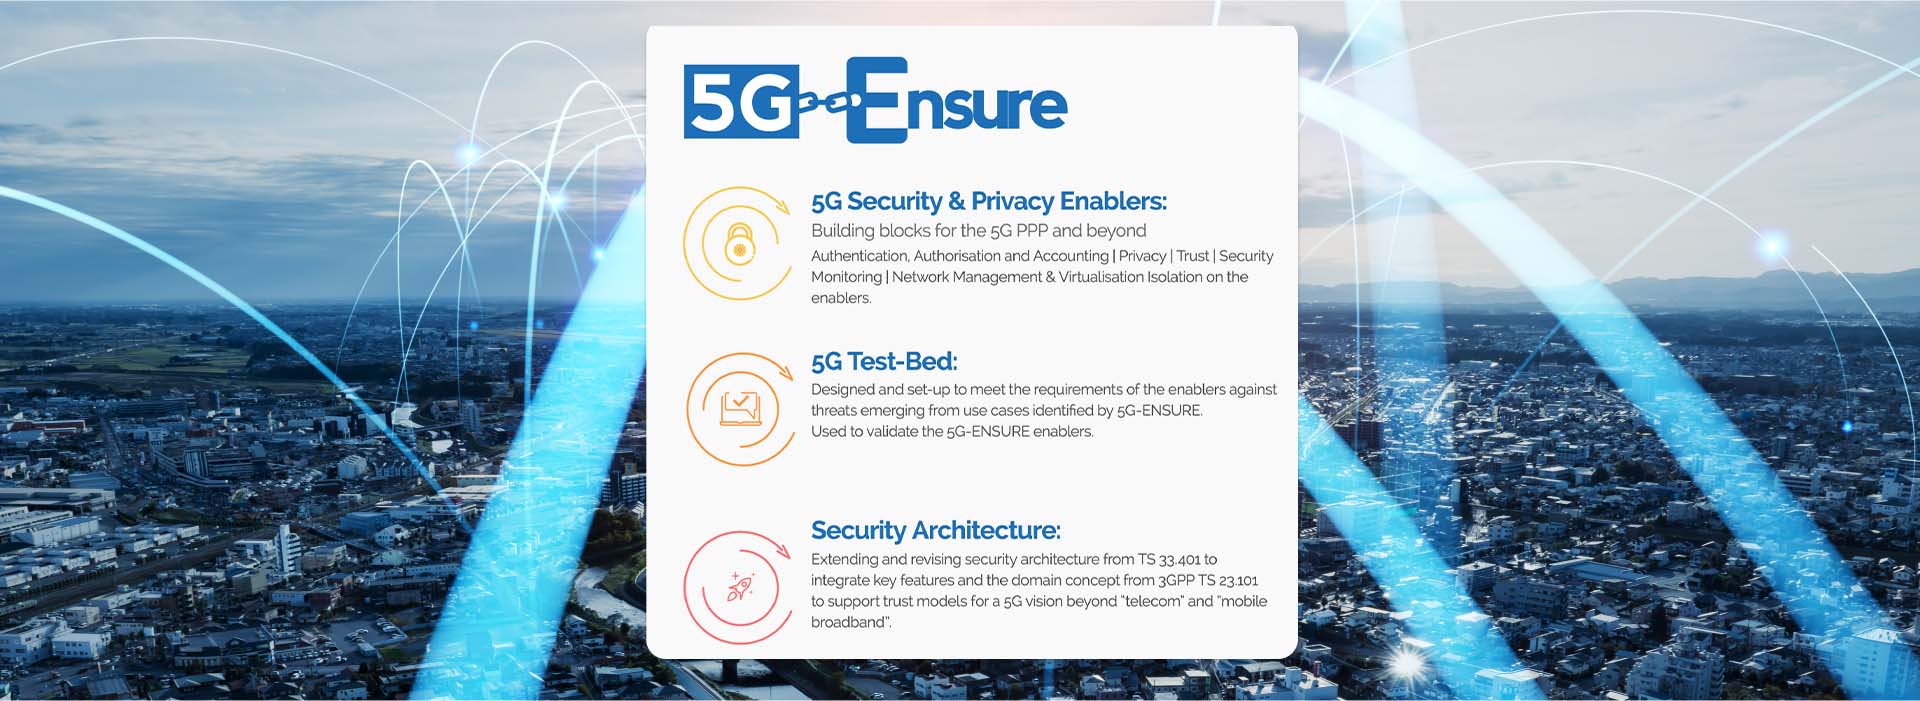 5G Ensure Background